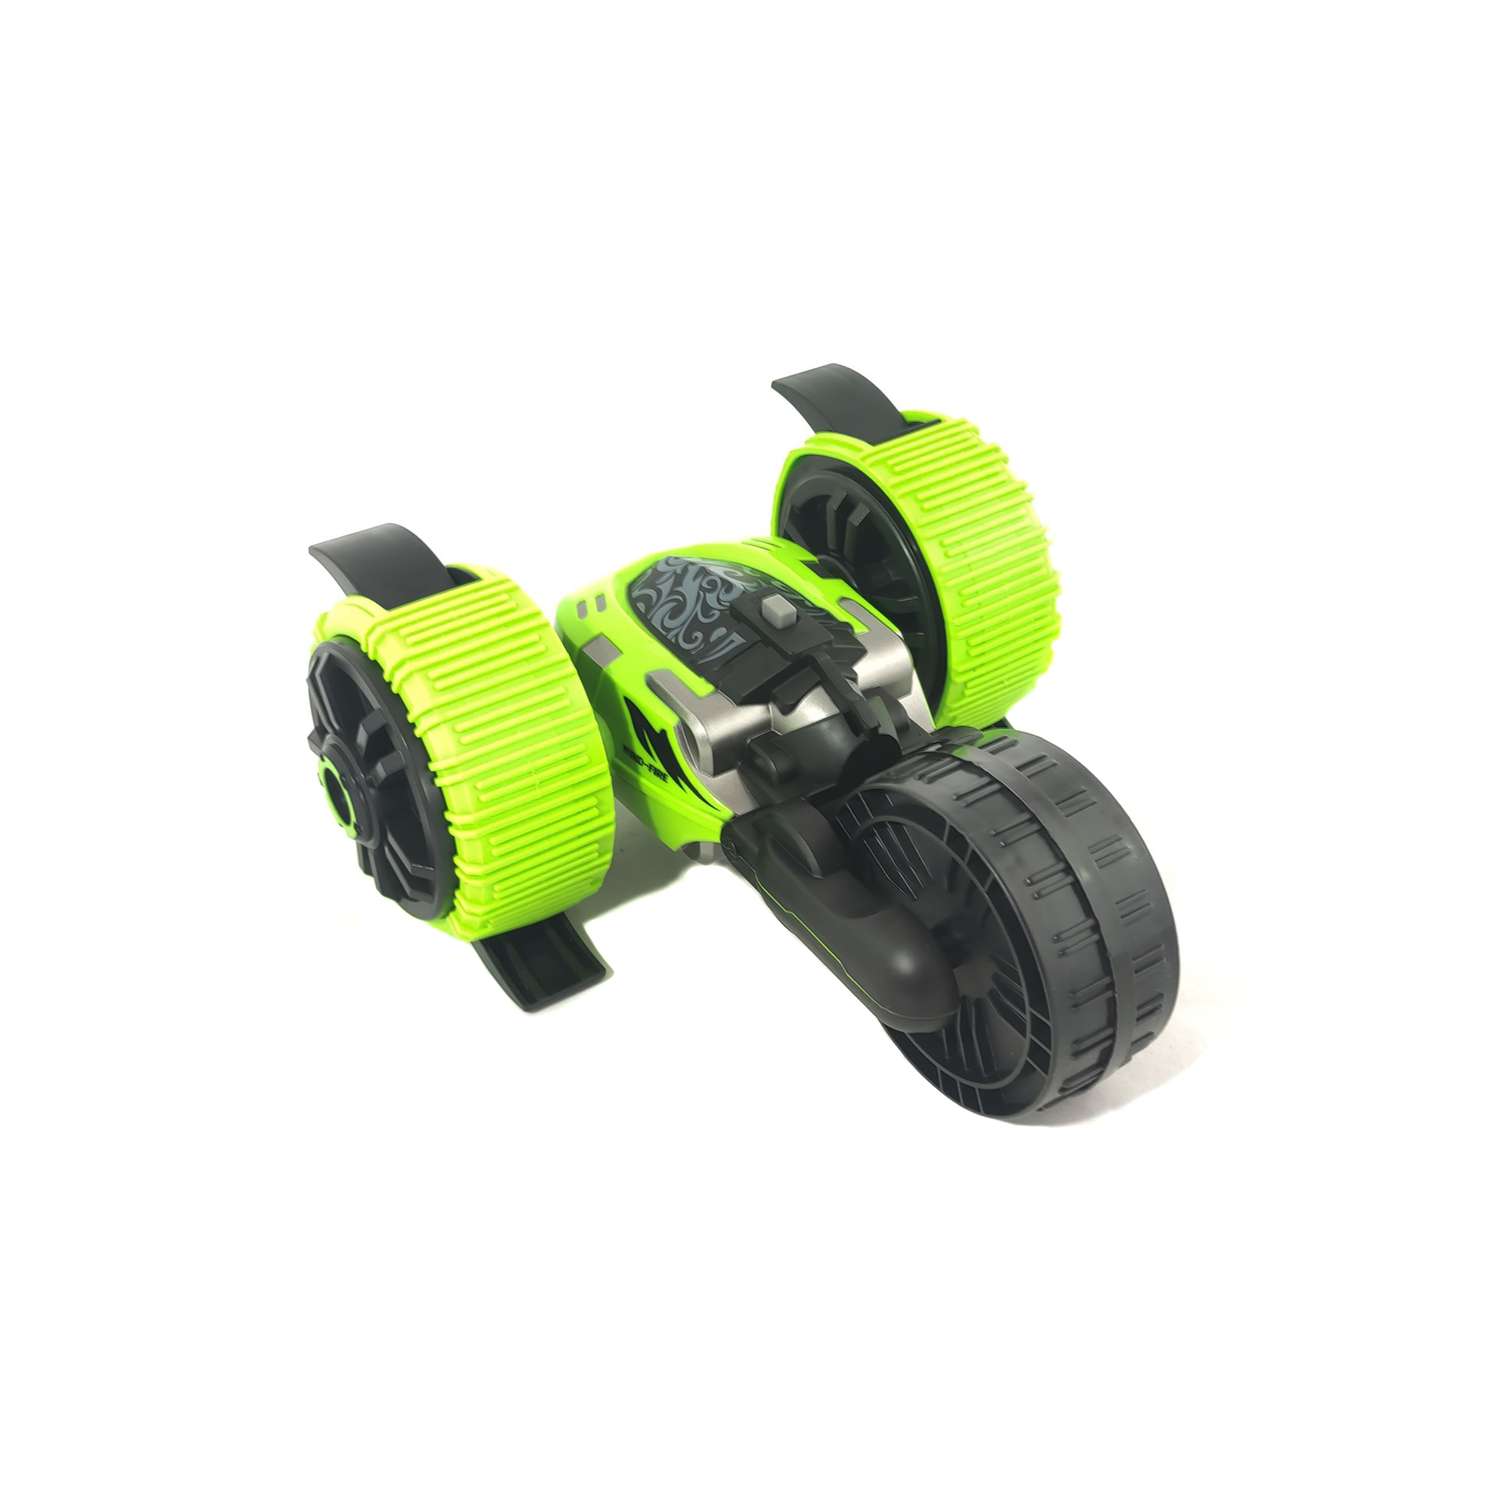 Машинка амфибия на пульте Create Toys 24 см 2.4G влагозащита плавает - фото 2